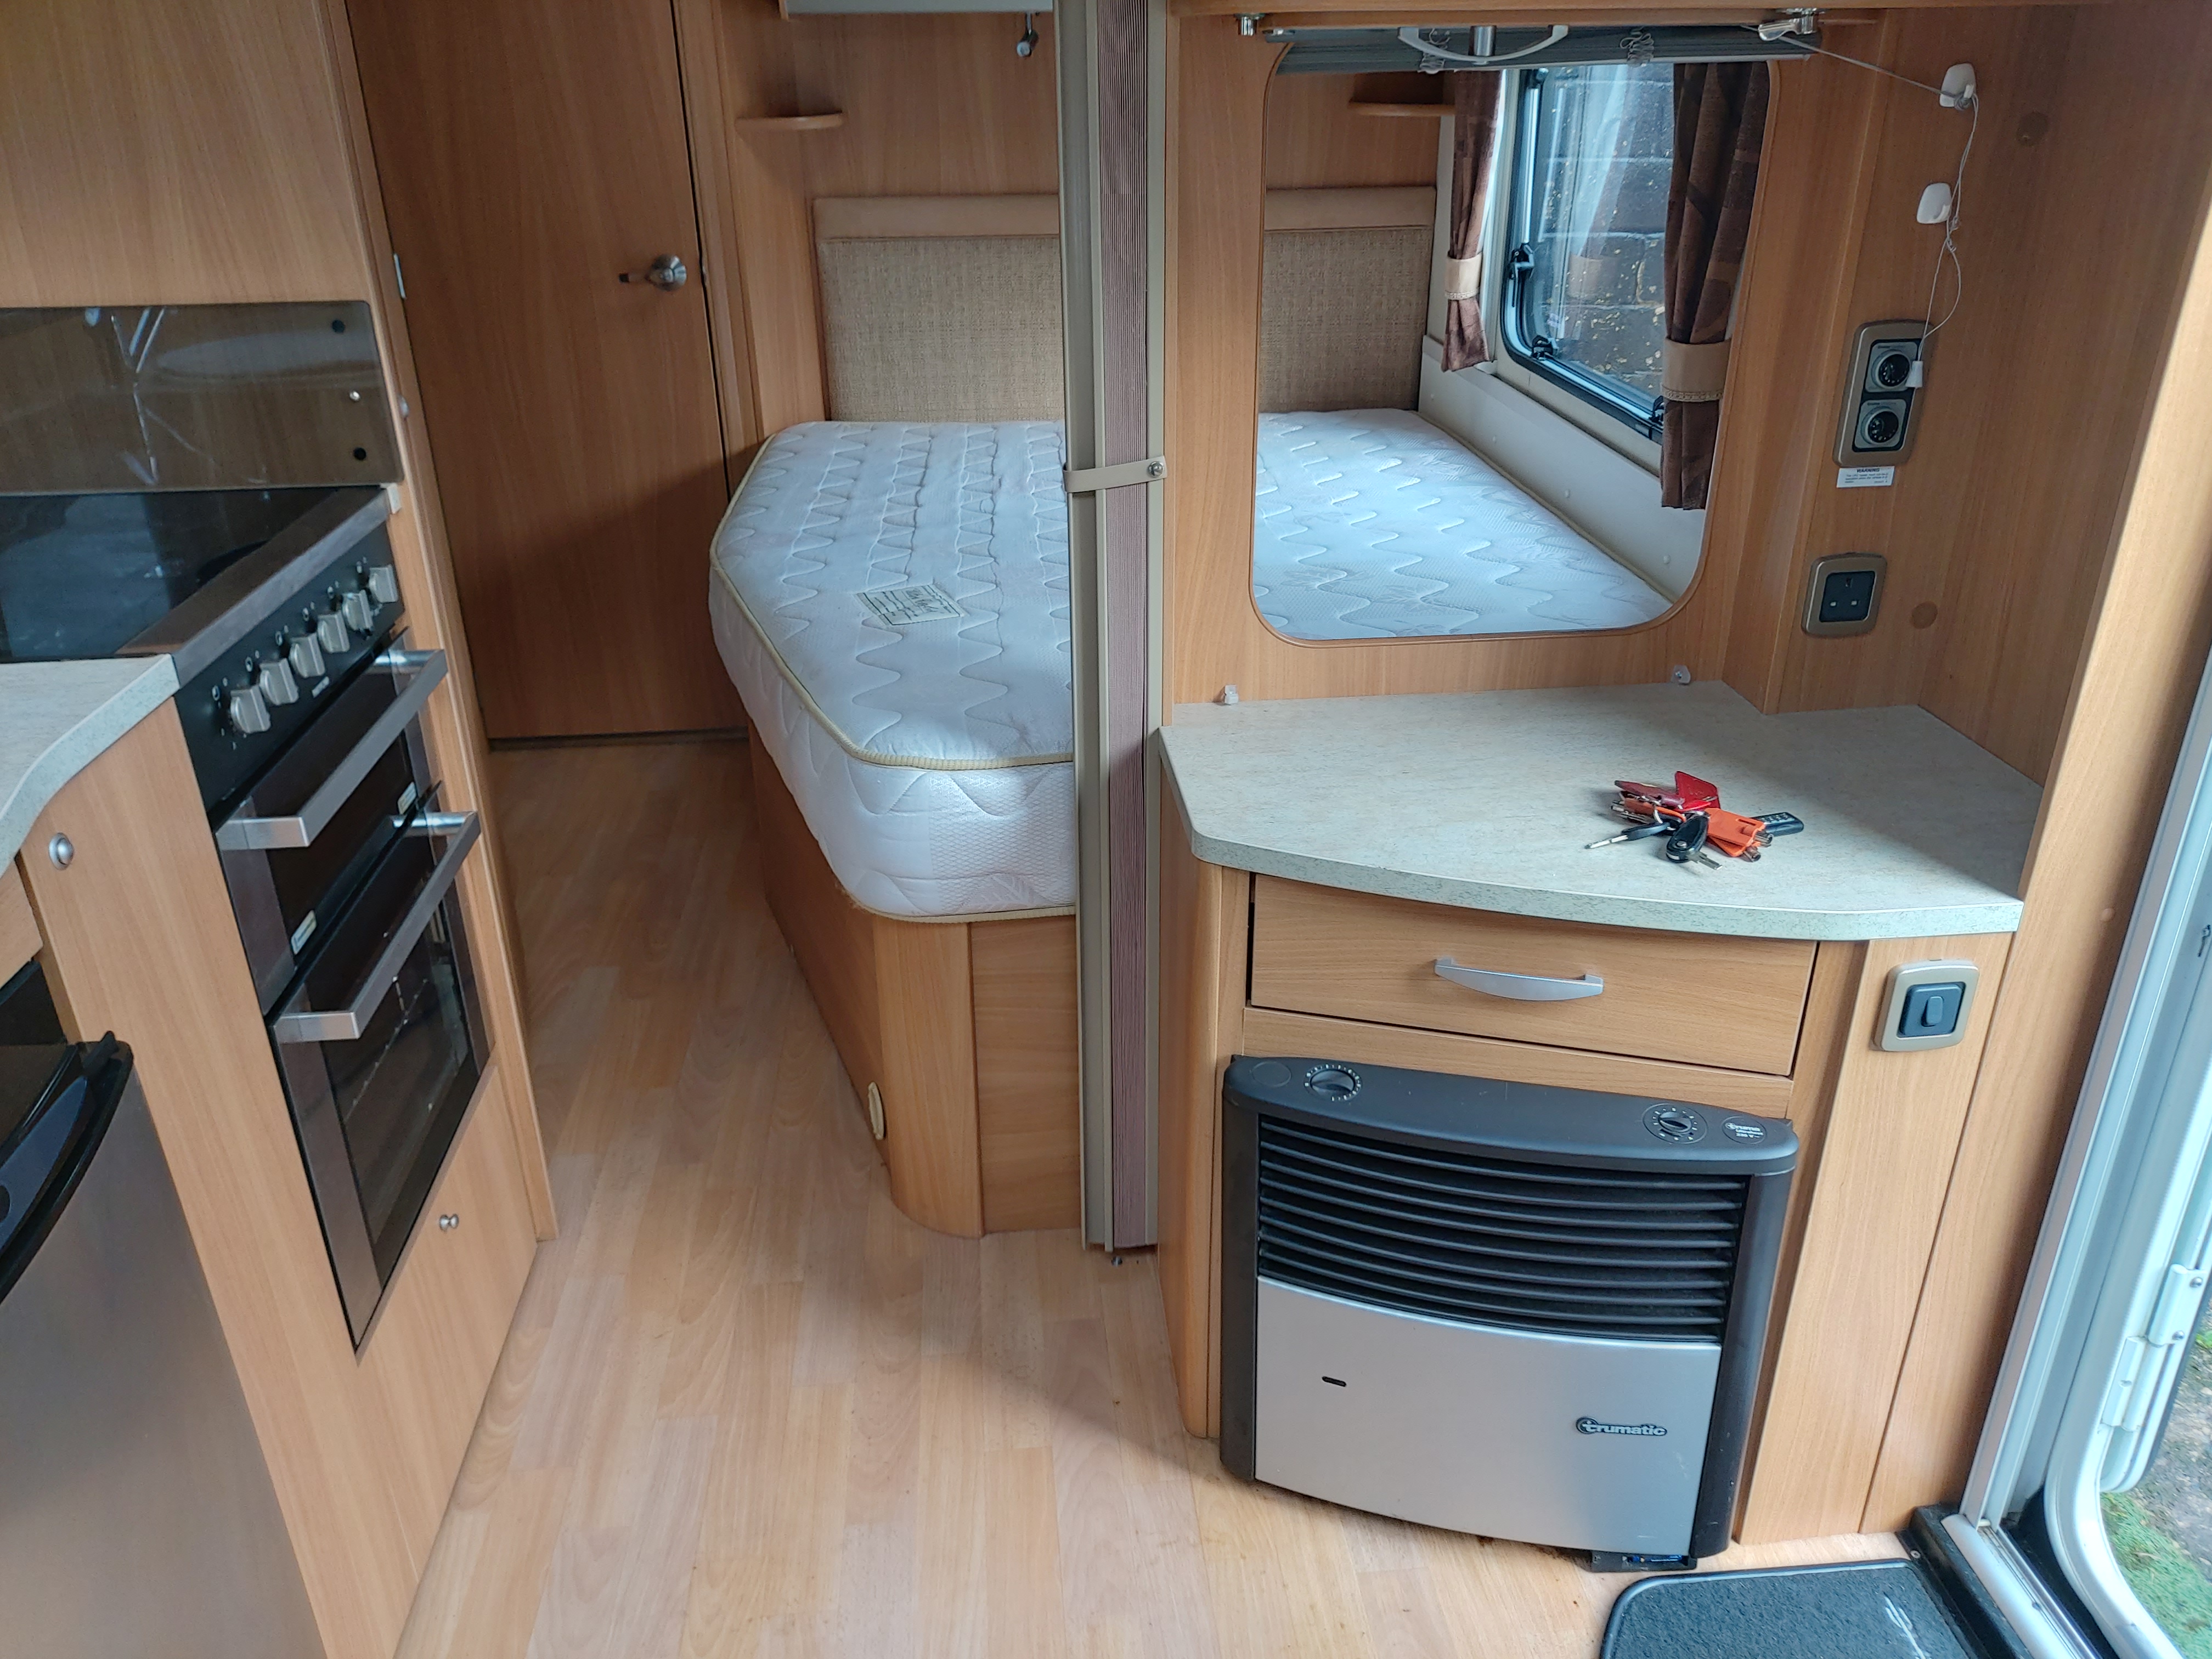 2010 Swift Corniche 19-4  4 Berth Fixed Bed End Washroom Caravan, Motor Mover